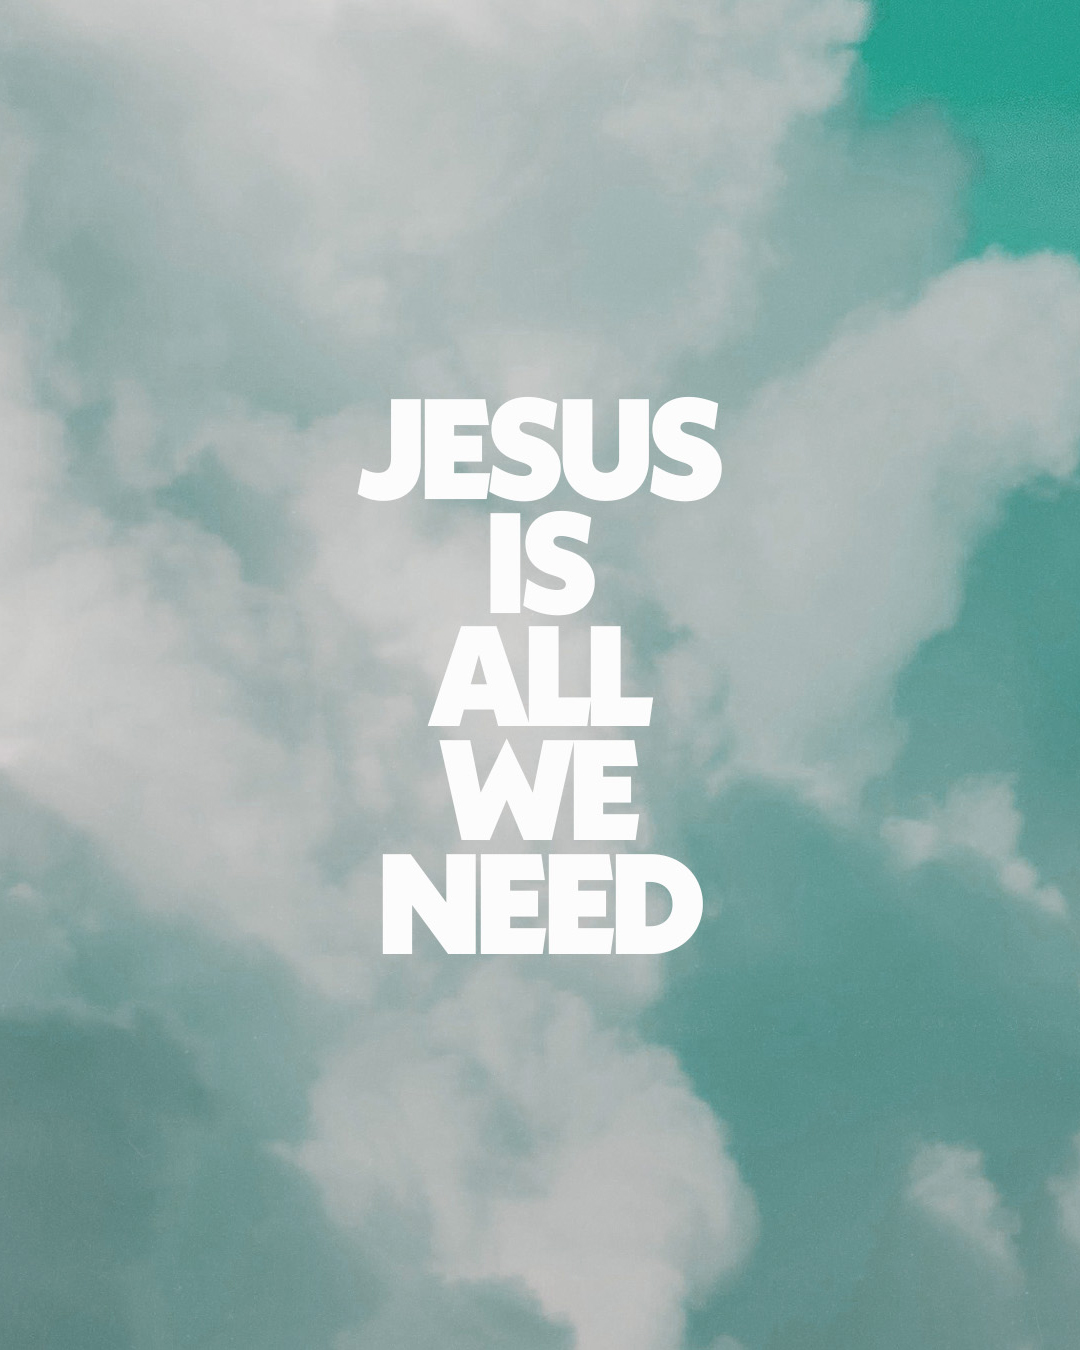 Jesus is all we need